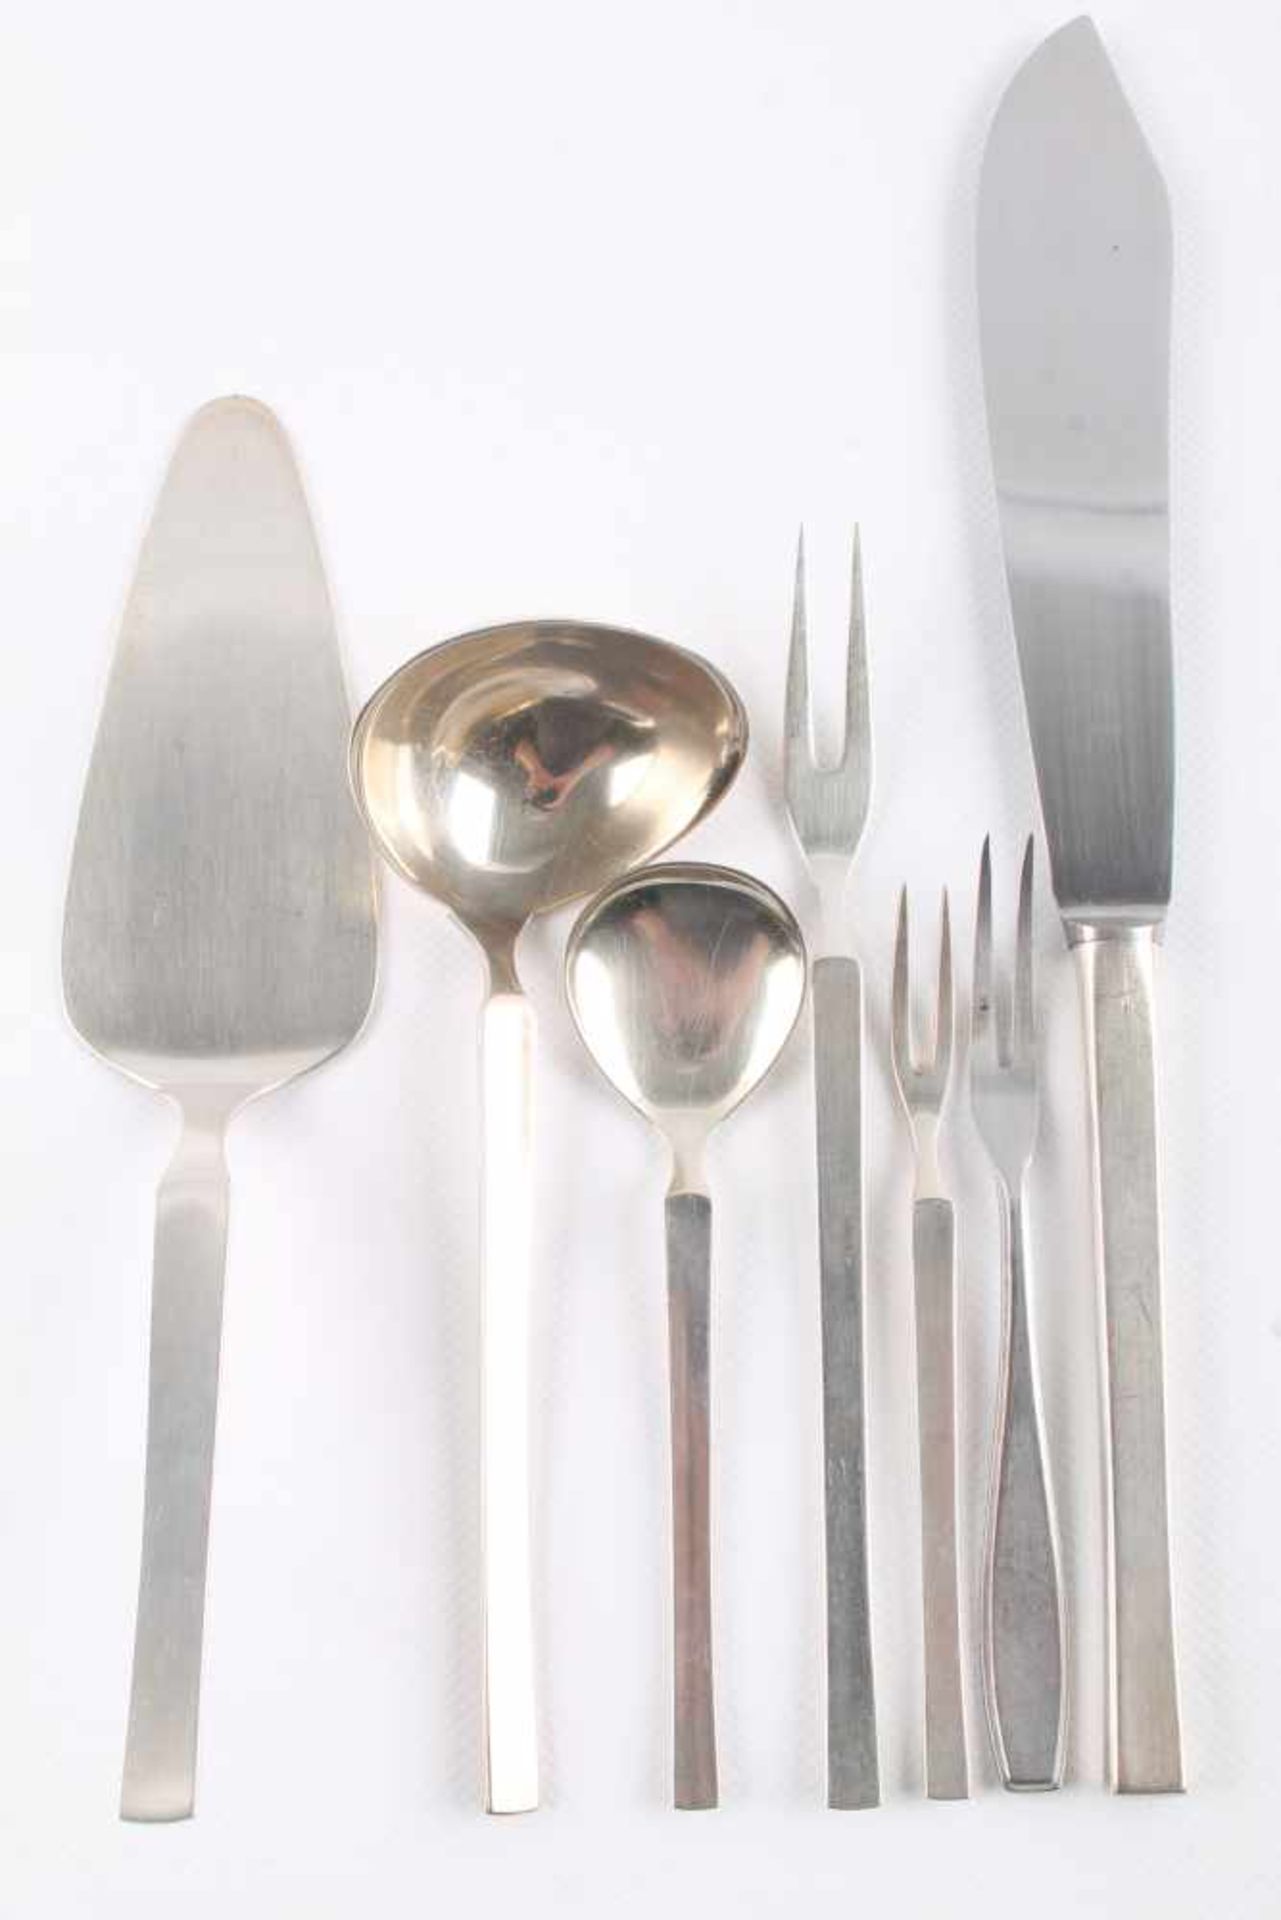 Umfangreiches WMF Besteck für 6 Personen, extensive cutlery for 6 persons, - Image 3 of 5